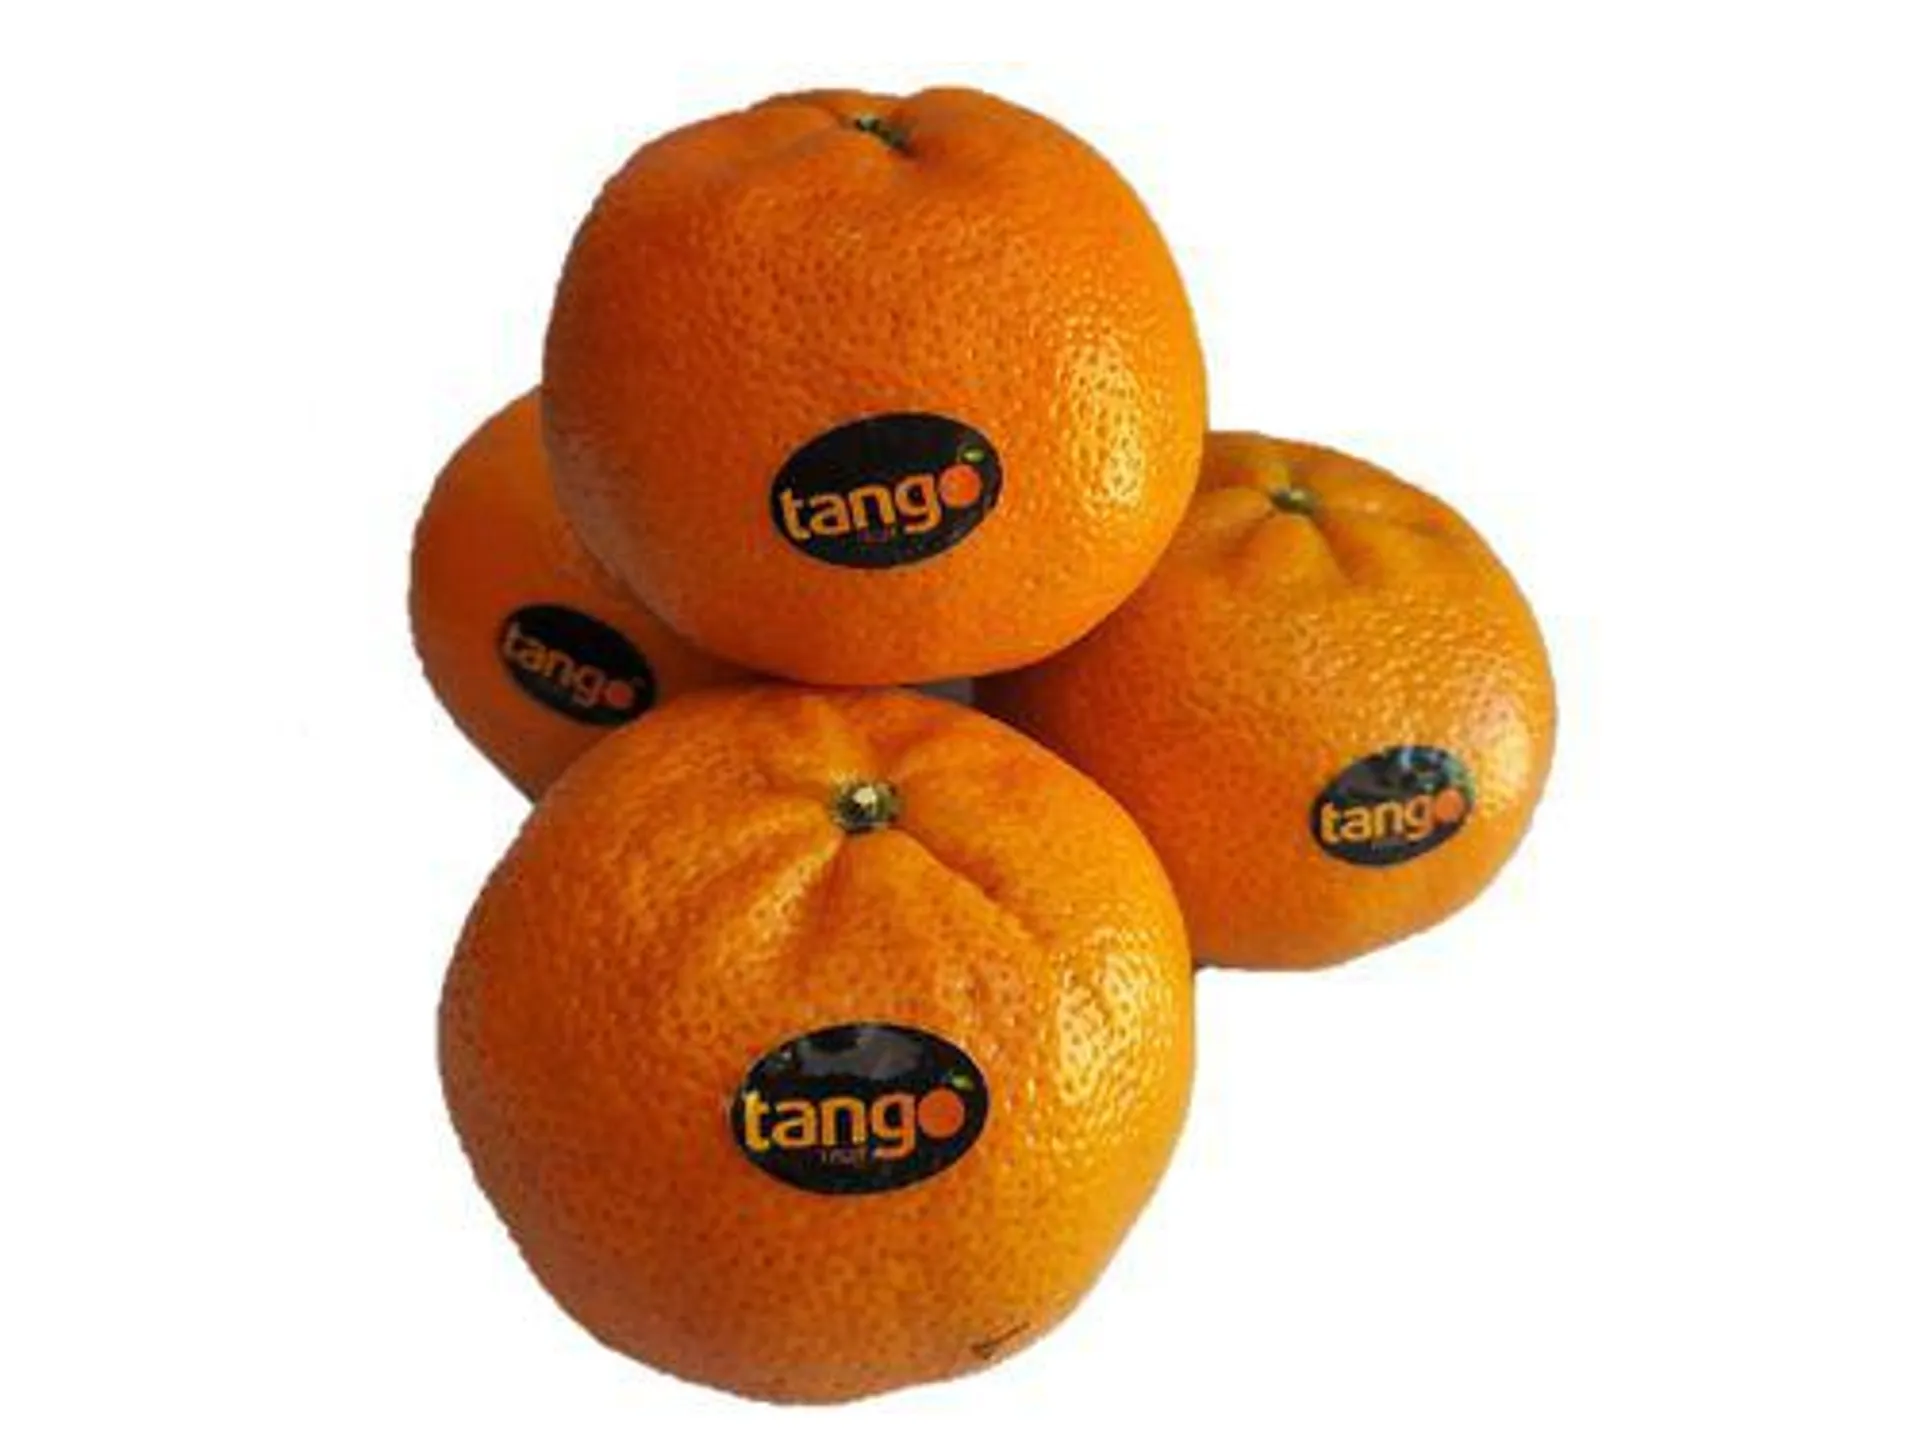 clementina tango sem sementes kg